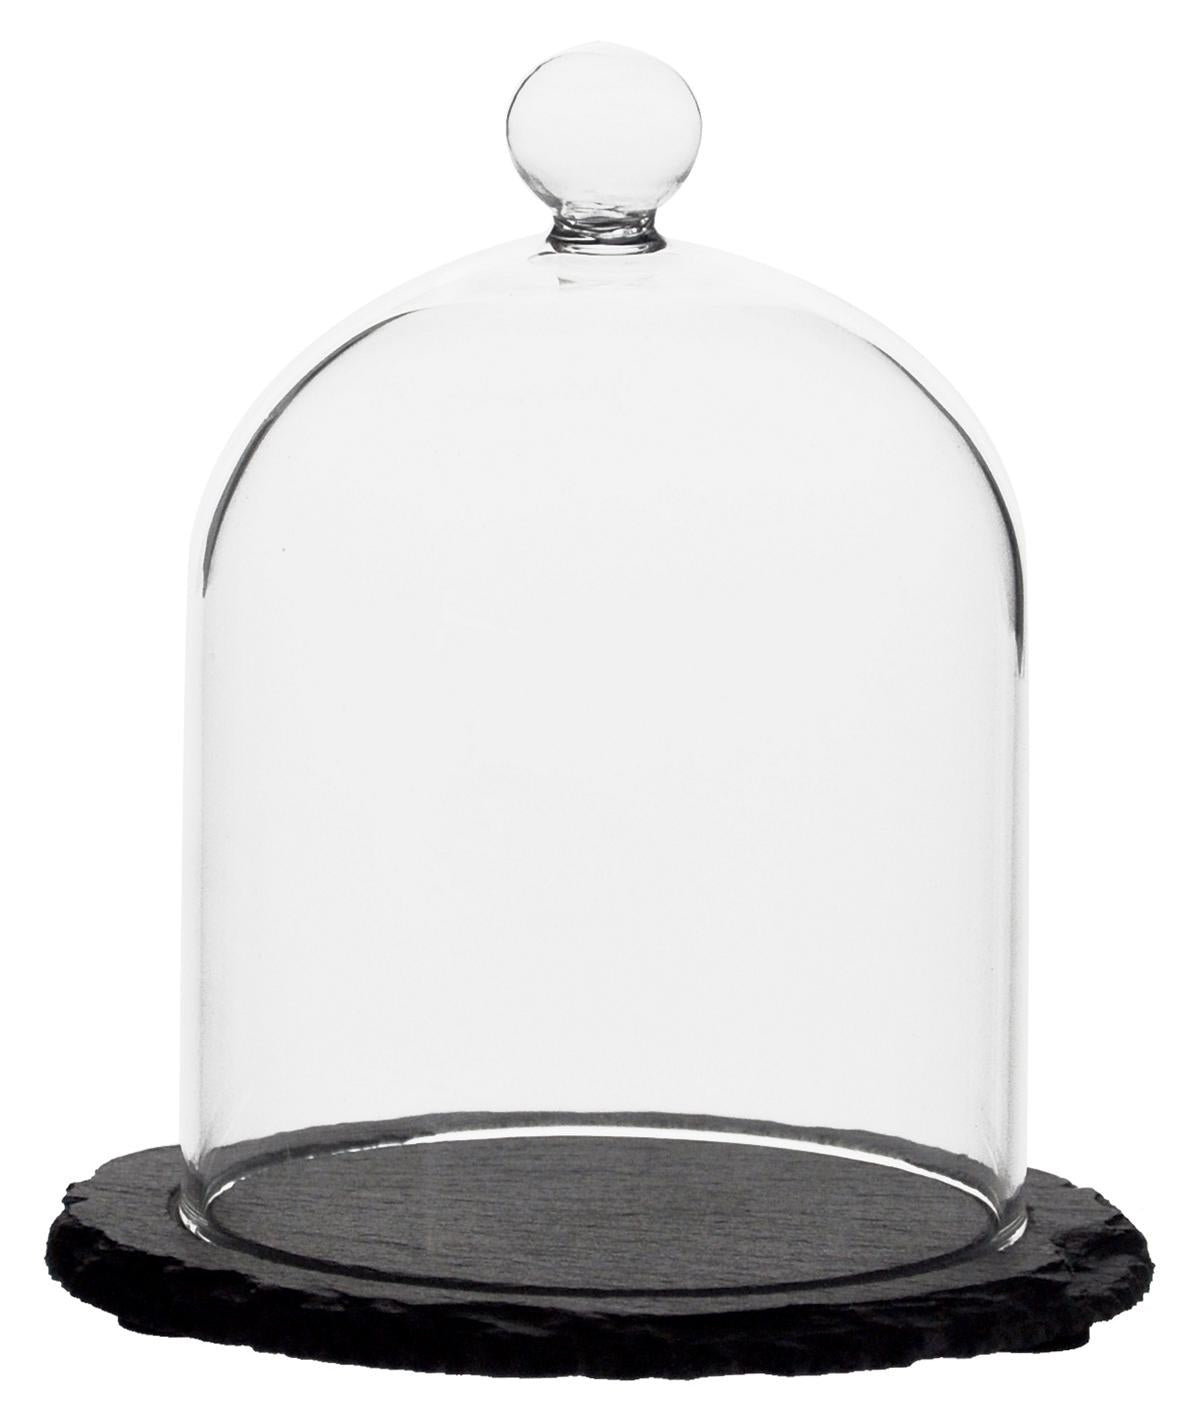 Glass bell on slate plate 9x12x15cm glass hood glass dome bell glass dome hood